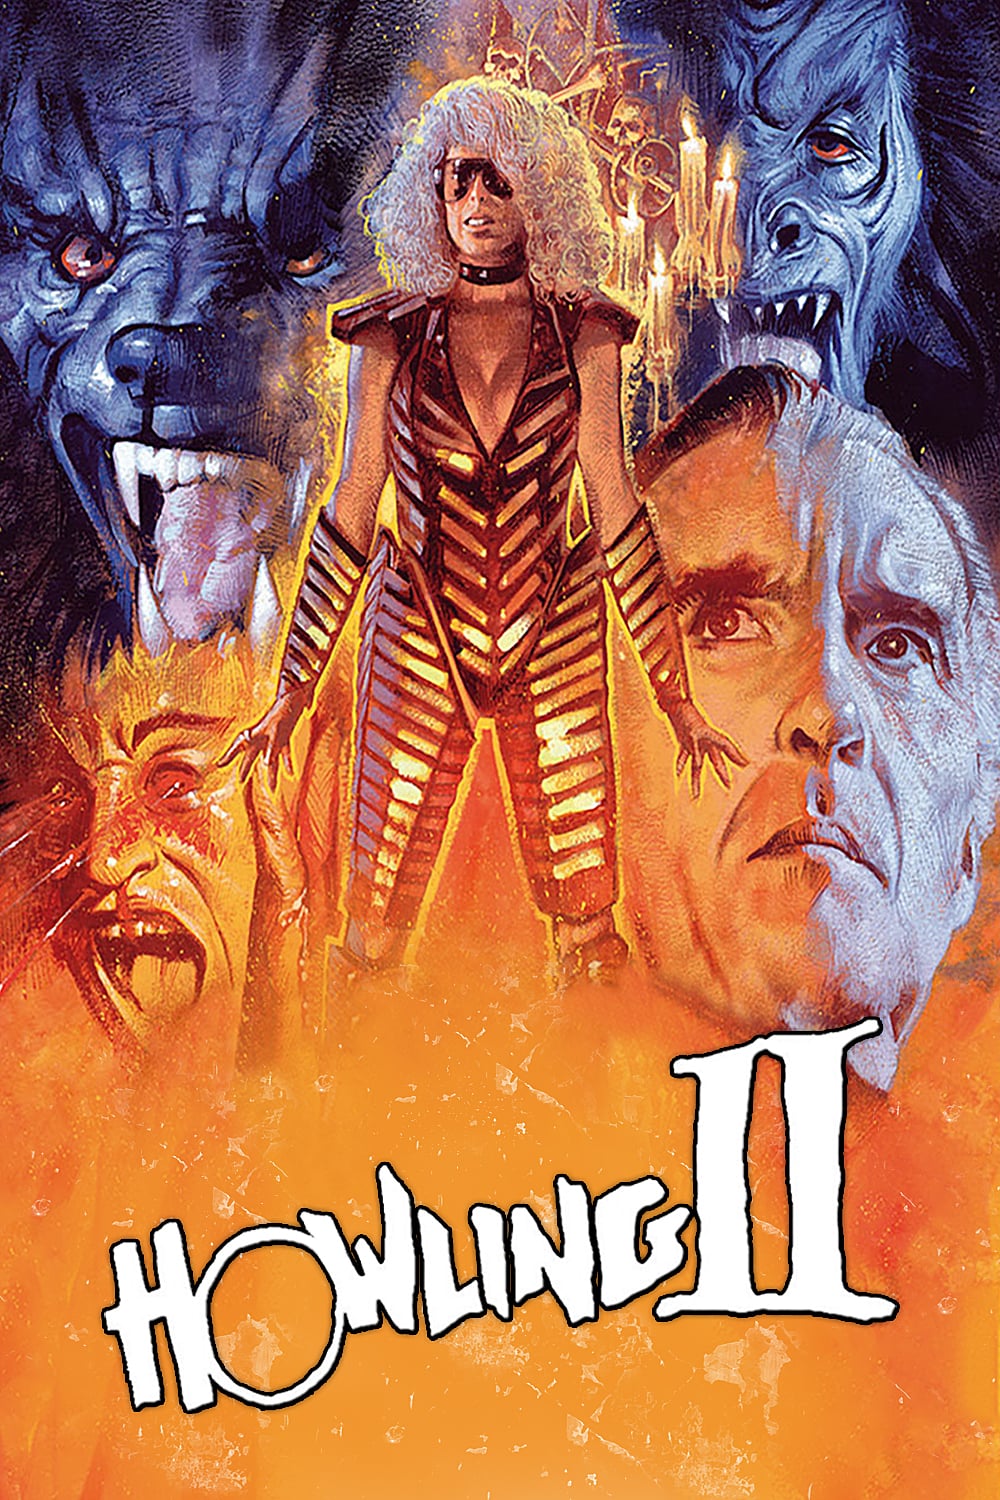 Poster for the movie "Howling II: Stirba - Werewolf Bitch"